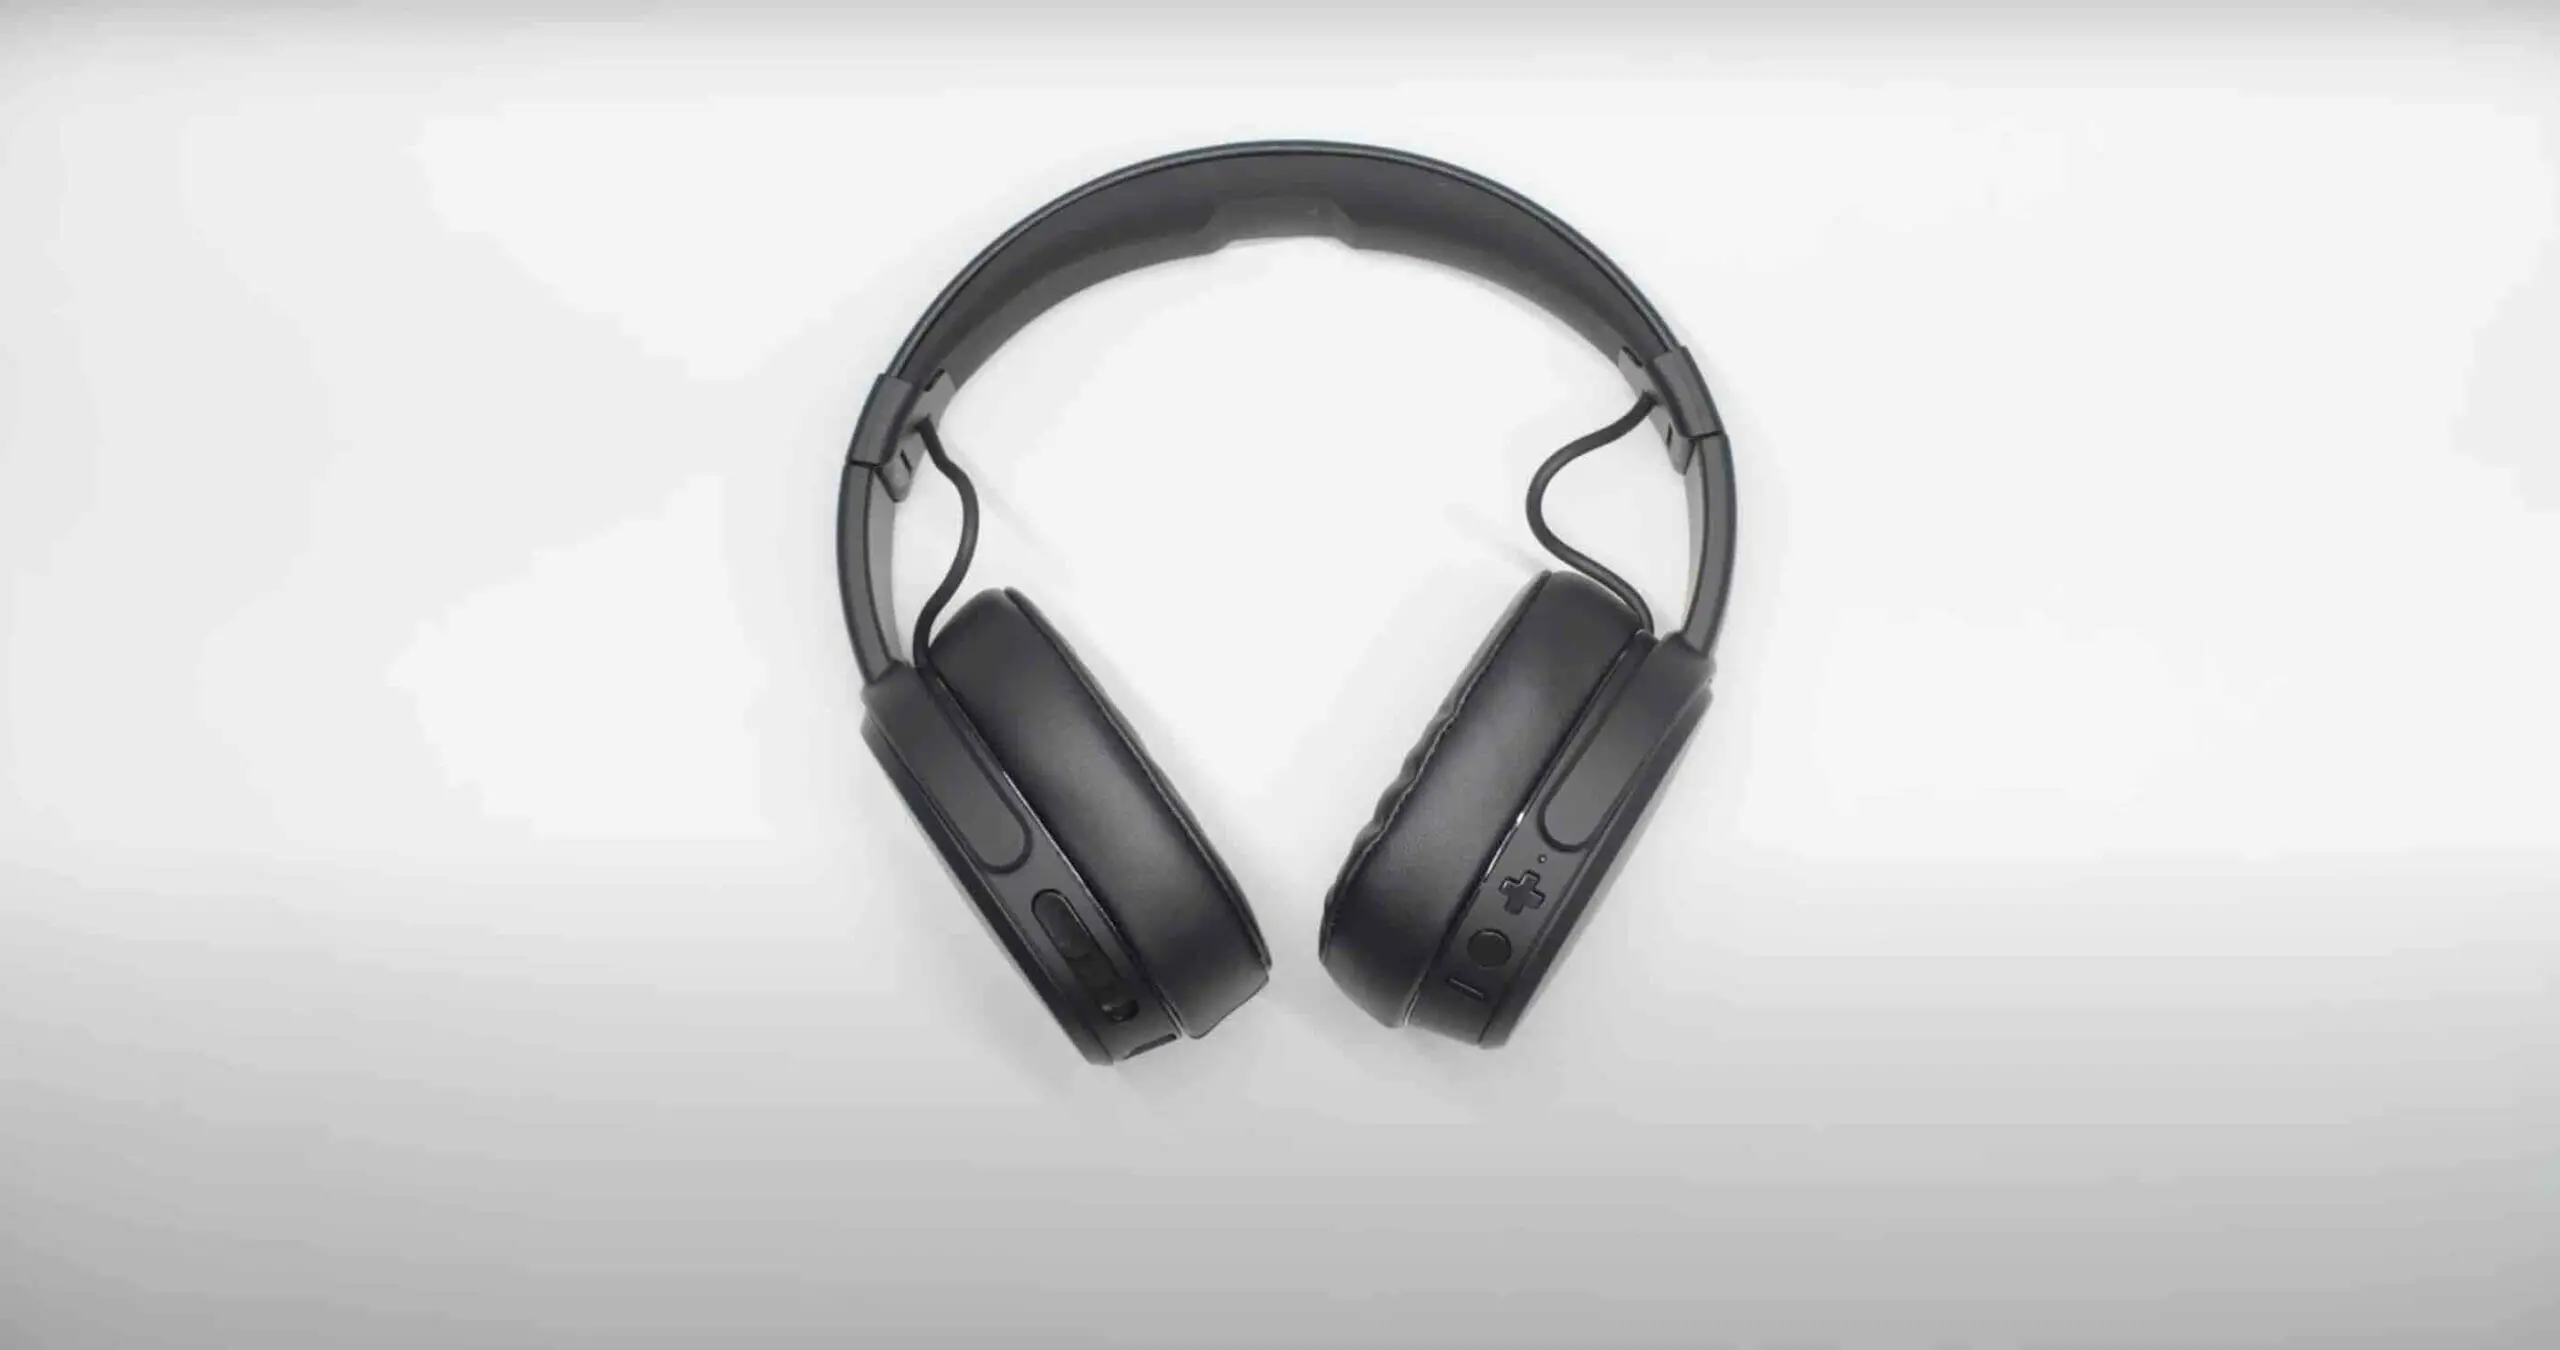 CRUSHER Wireless Bluetooth headphone in black color